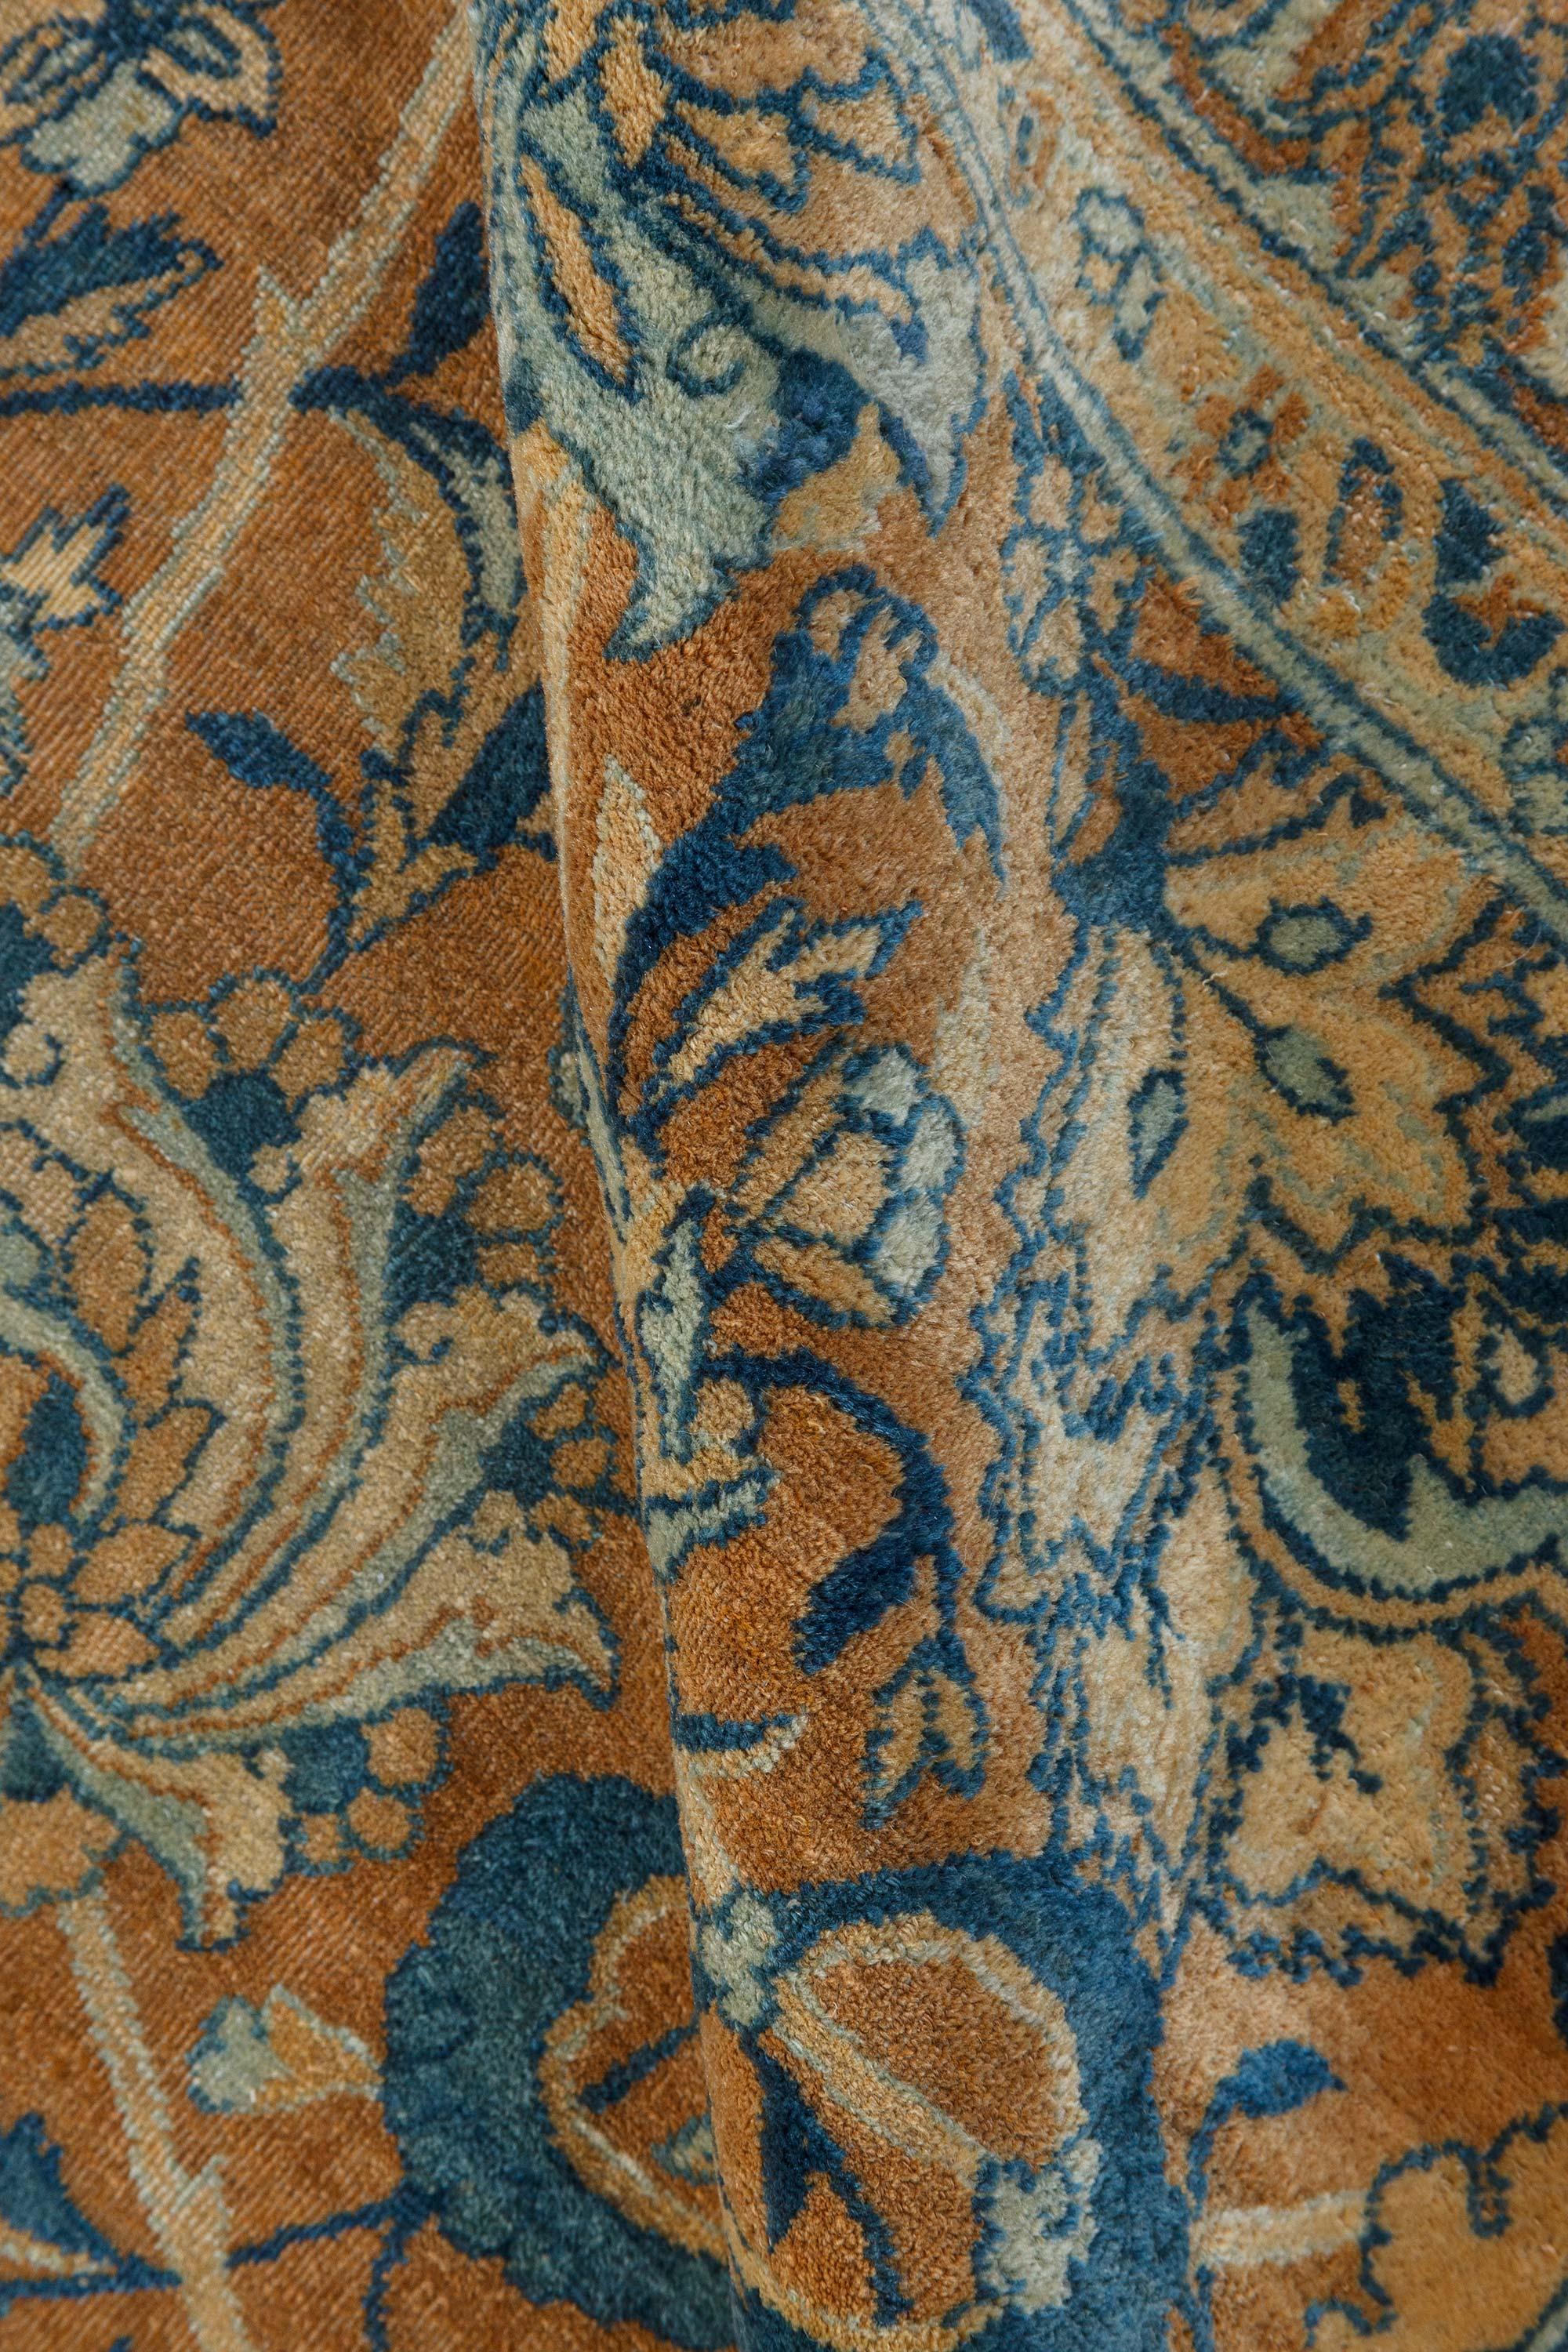 Antique Persian Kirman brown, blue handmade wool rug
Size: 12'9